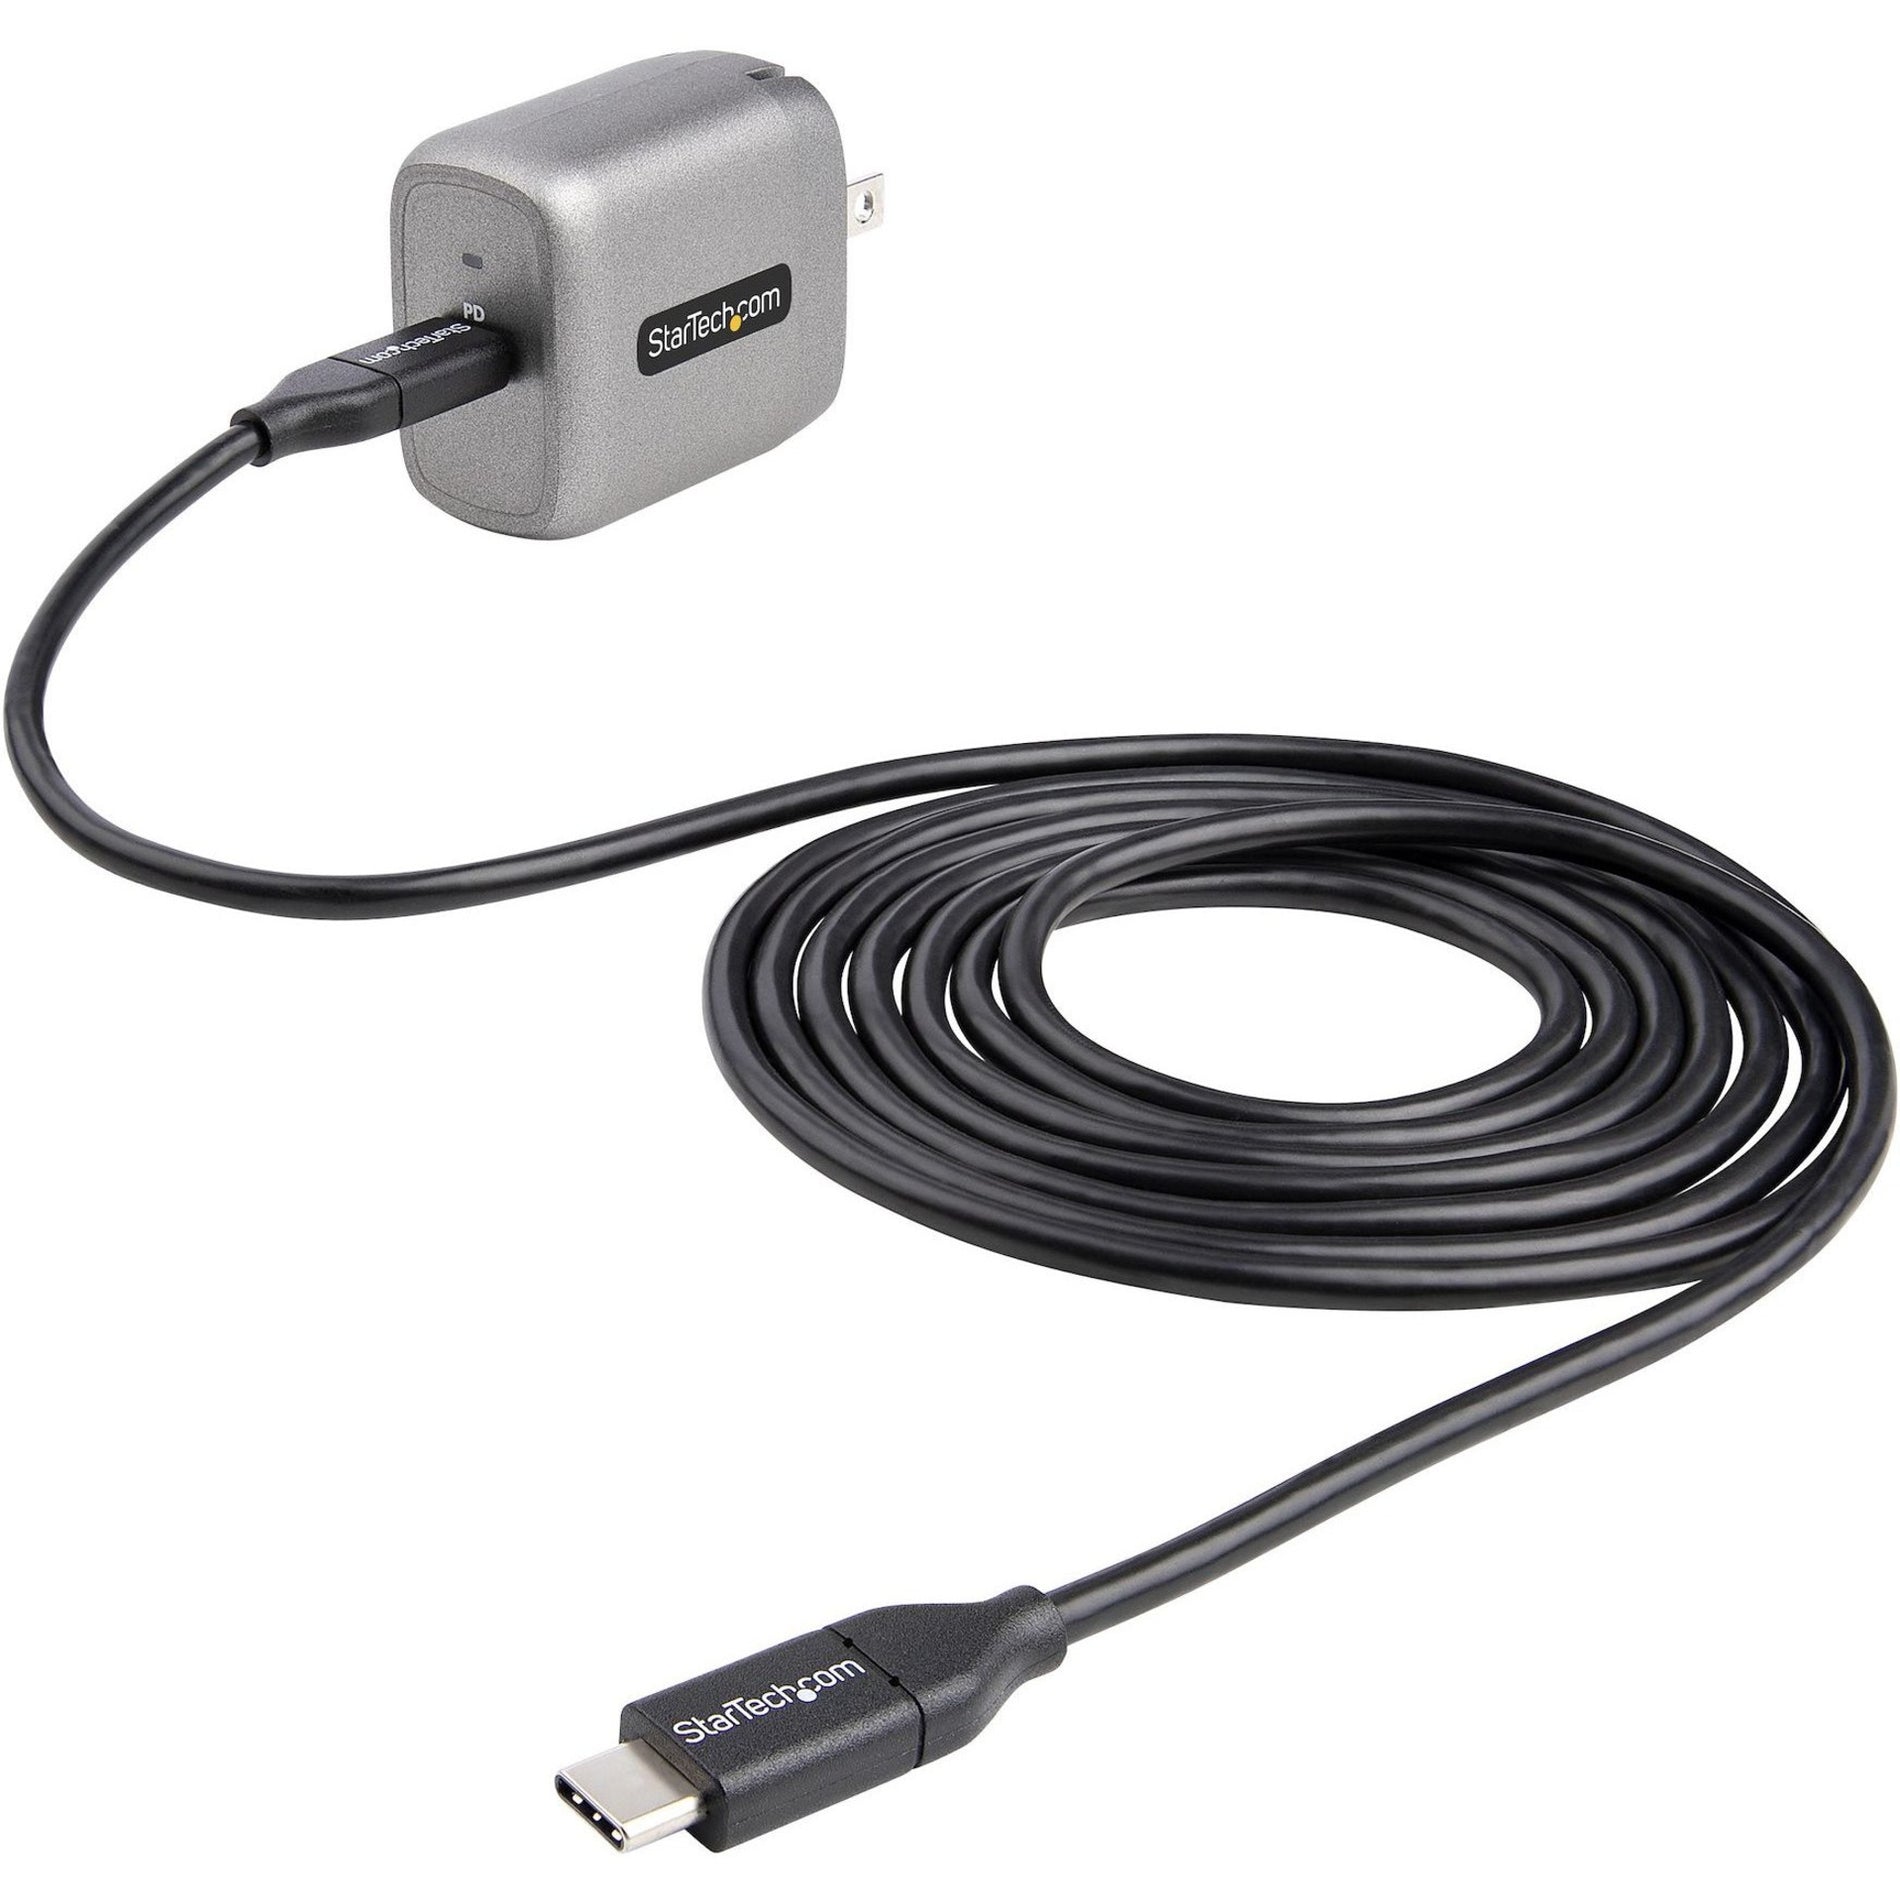 Tripp Lite - U280-W01-50C1 - Compact USB-C Wall Charger, 50W, GaN